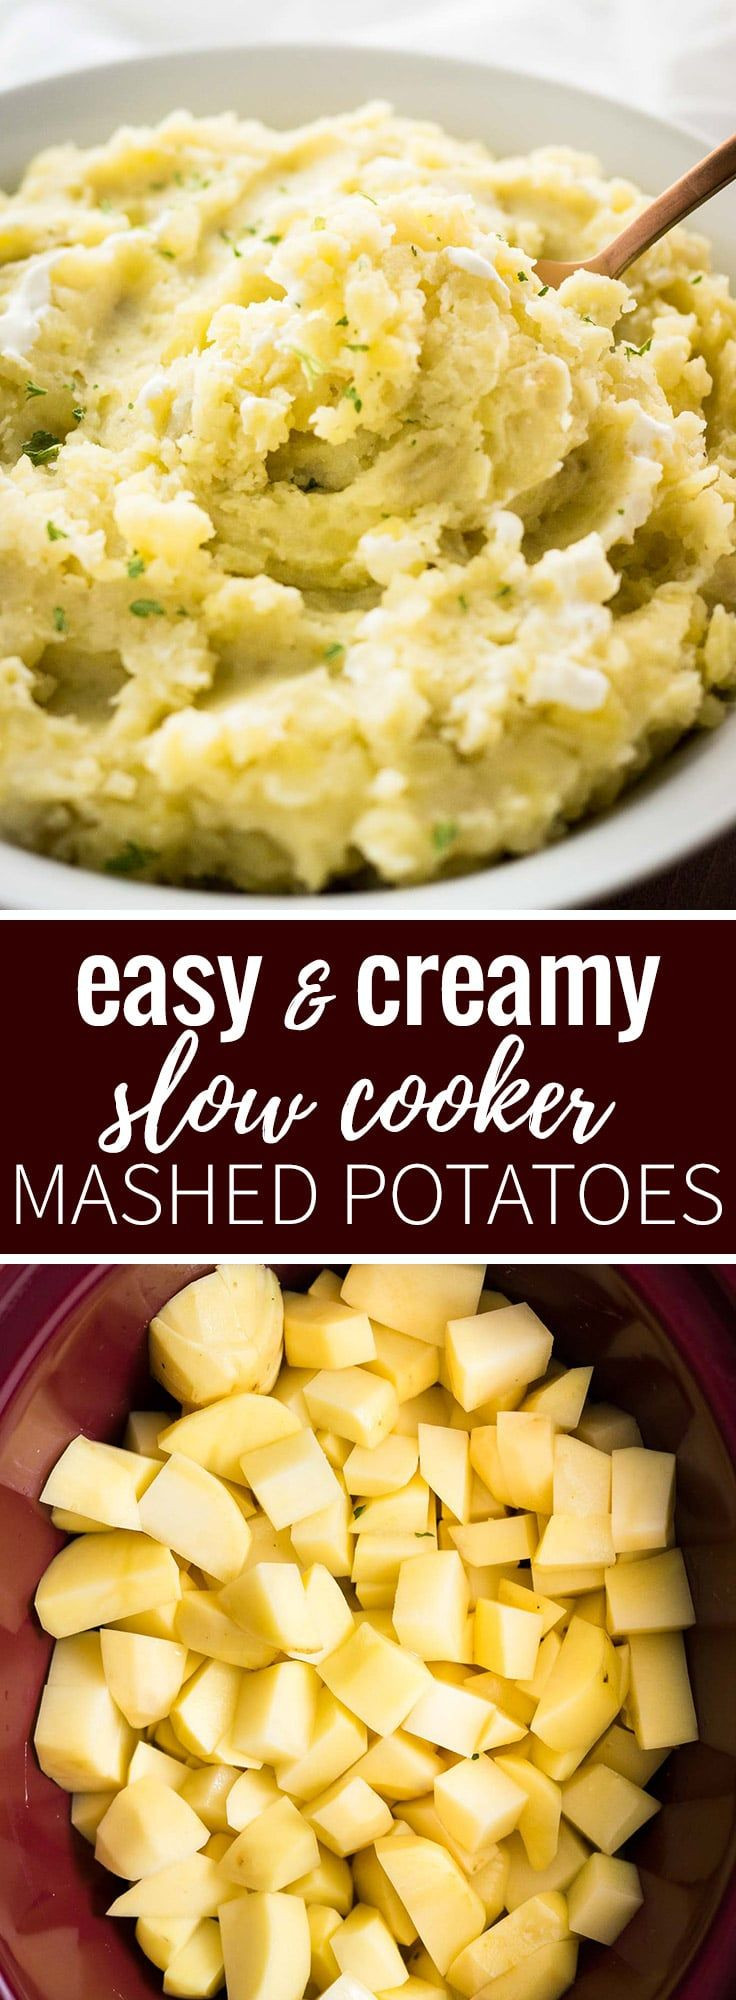 Make Ahead Crock Pot Mashed Potatoes
 This Creamy Crock Pot Mashed Potatoes Recipe is SO easy